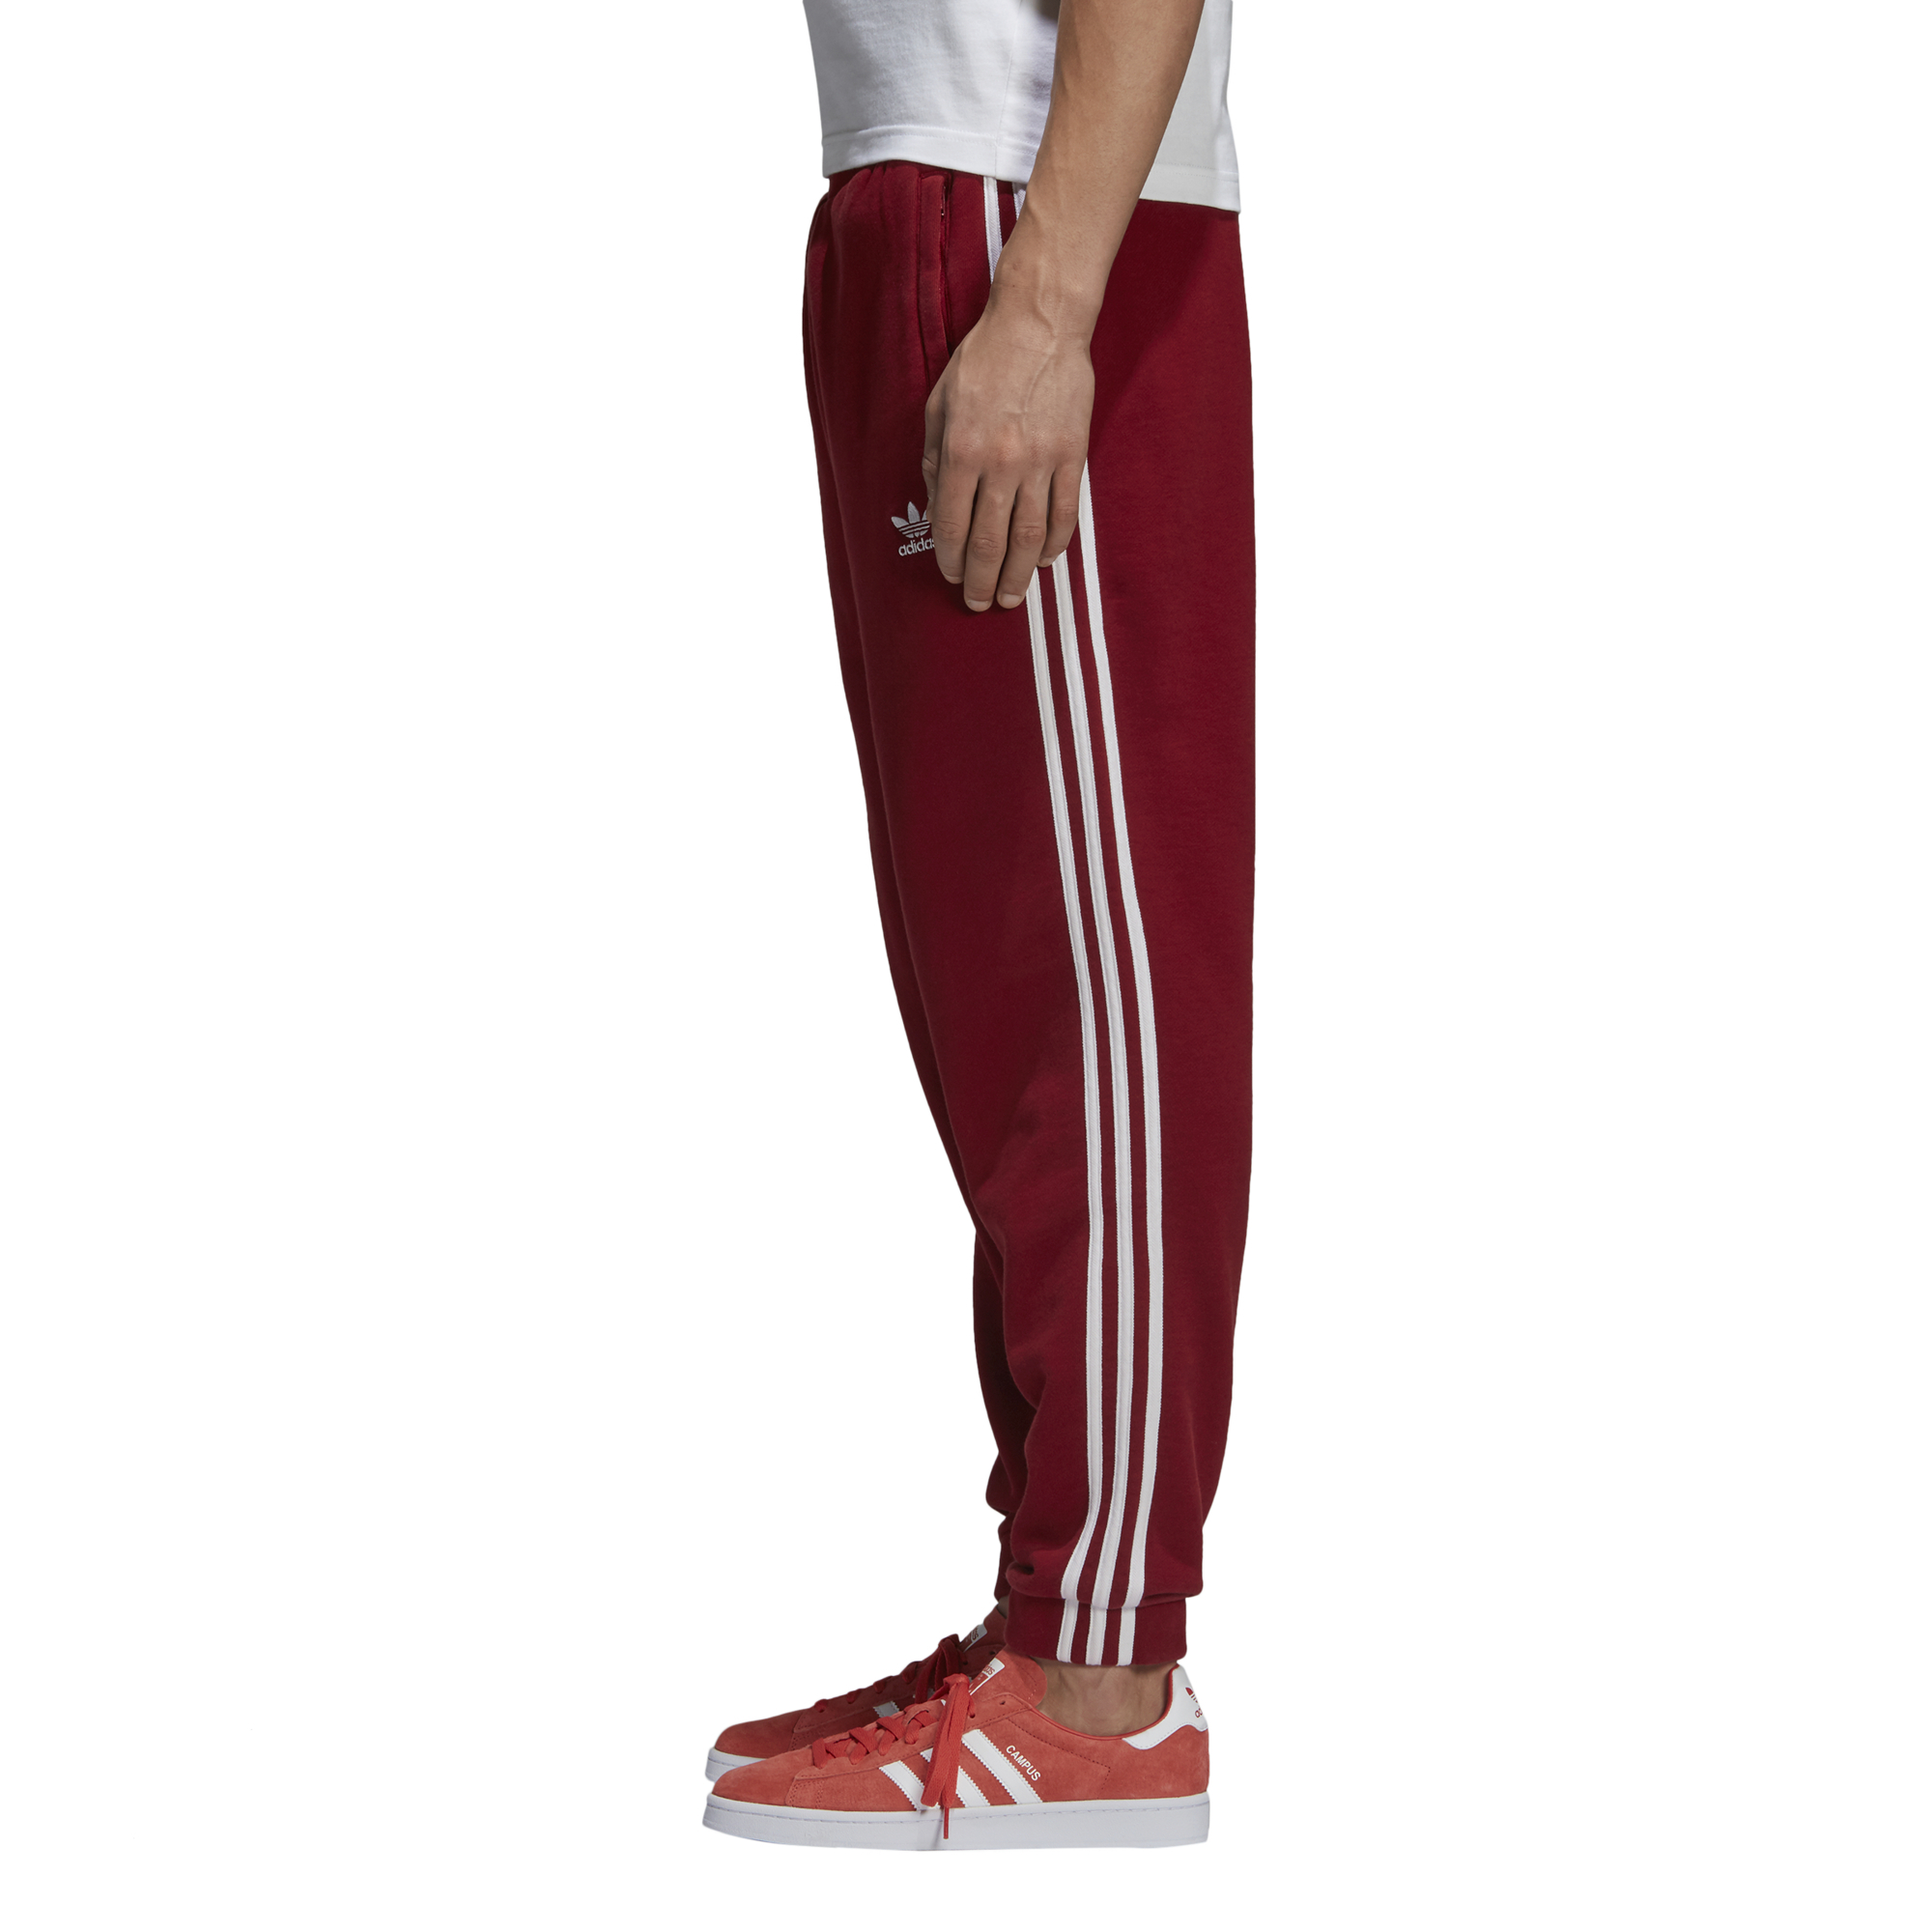 Adidas Originals 3-Stripes Pants (Rust Red)